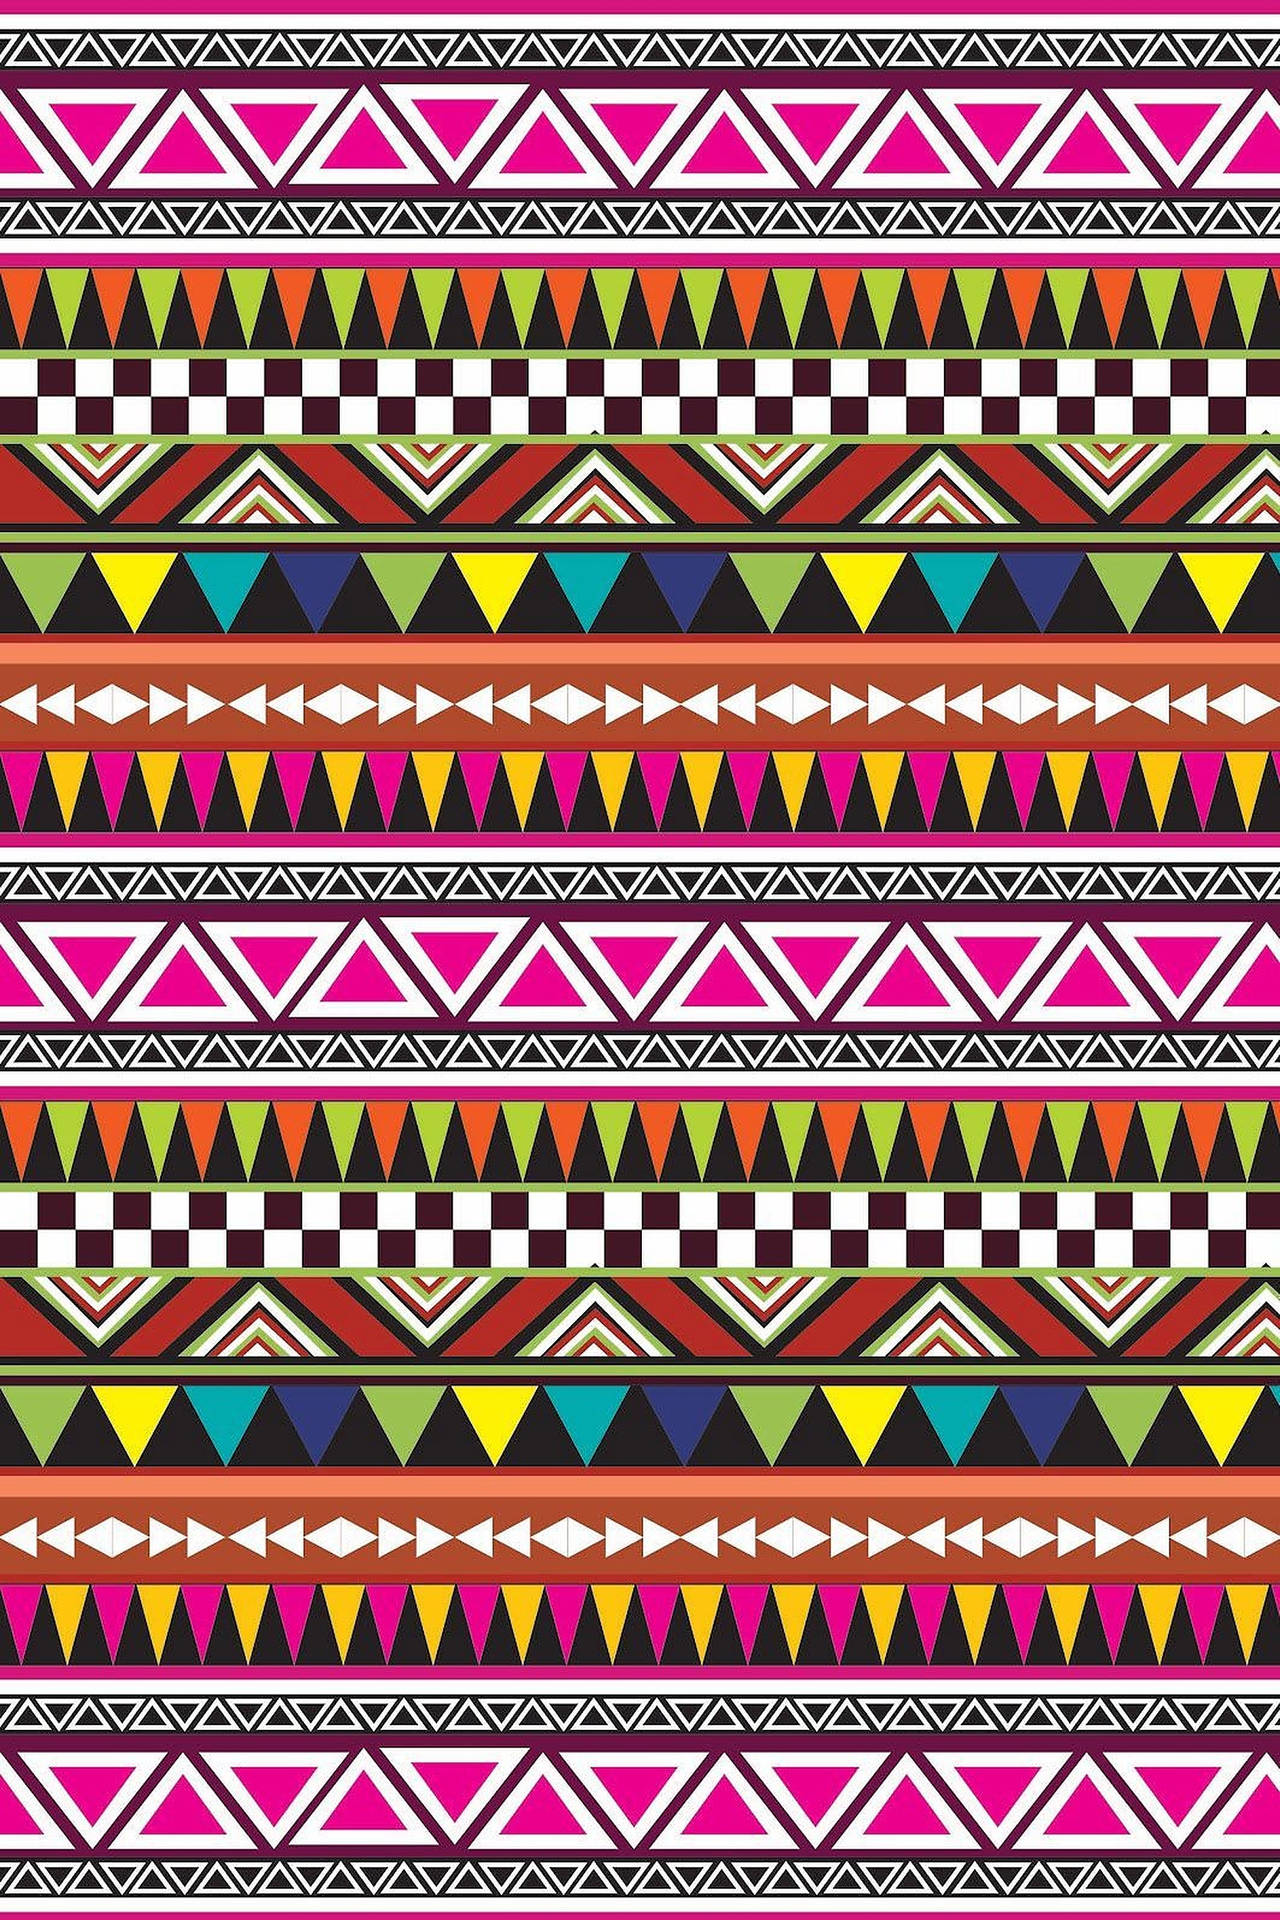 Aztec Tribal Pattern